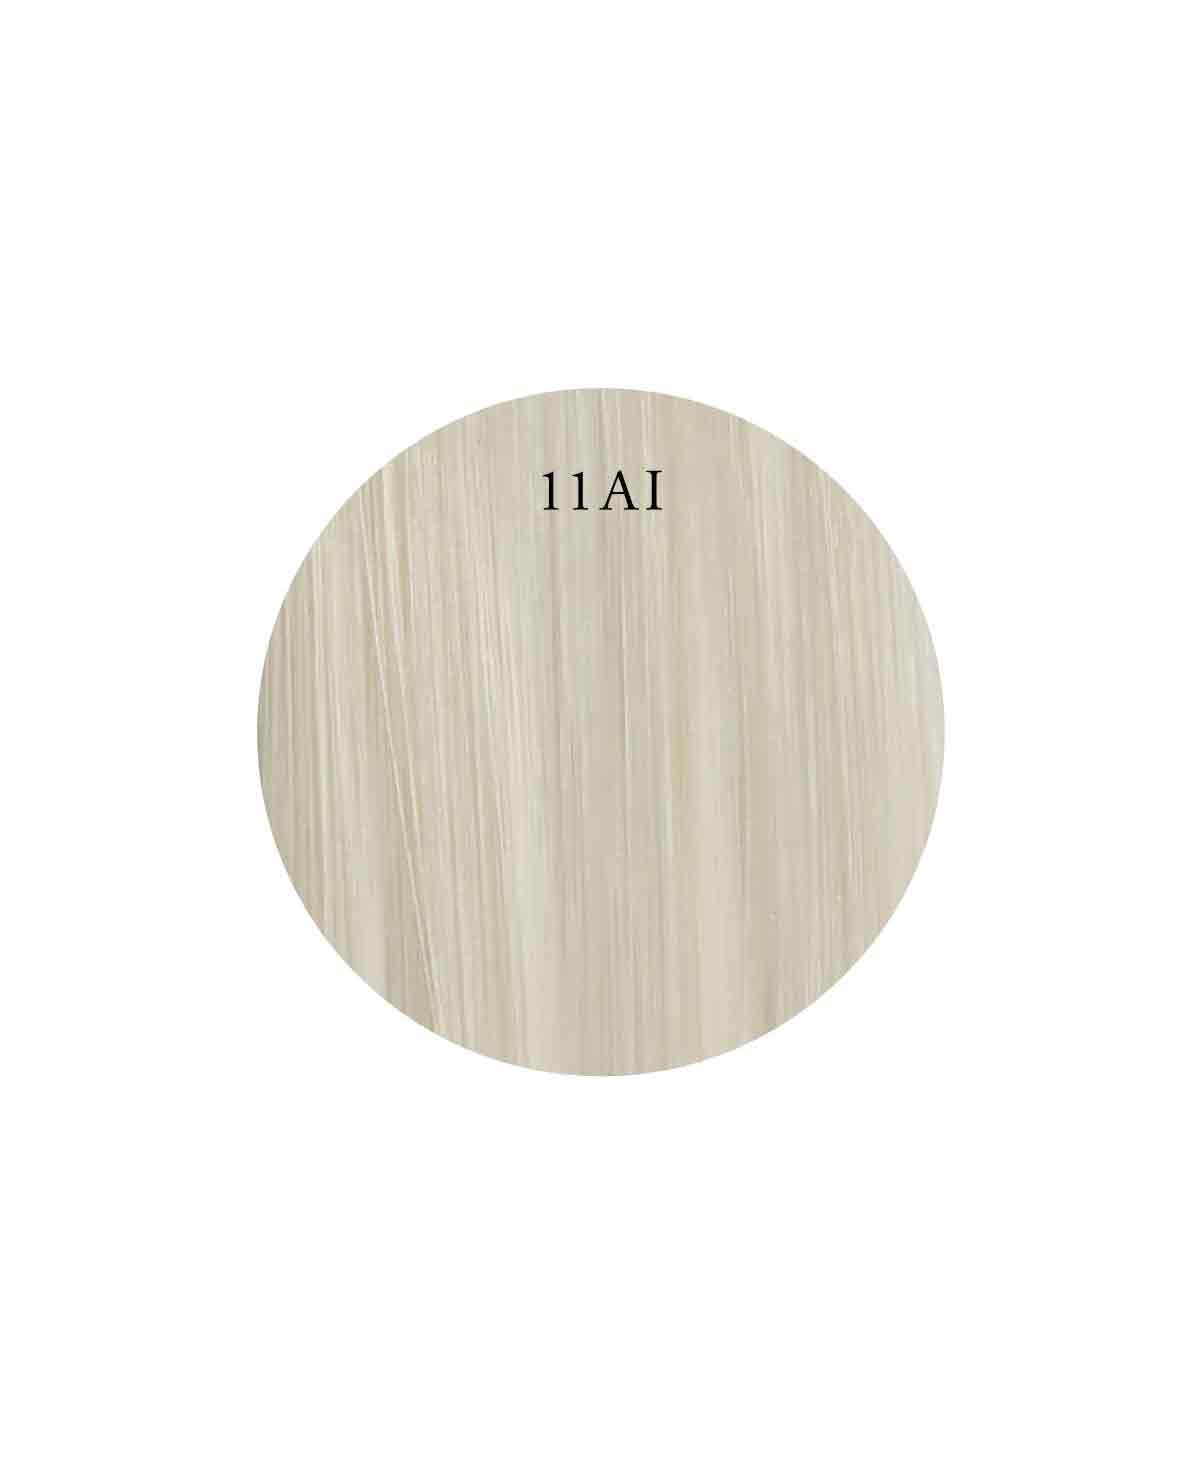 Showpony 30-35cm (14") Slim Tape Extensions - 11AI White Blonde 